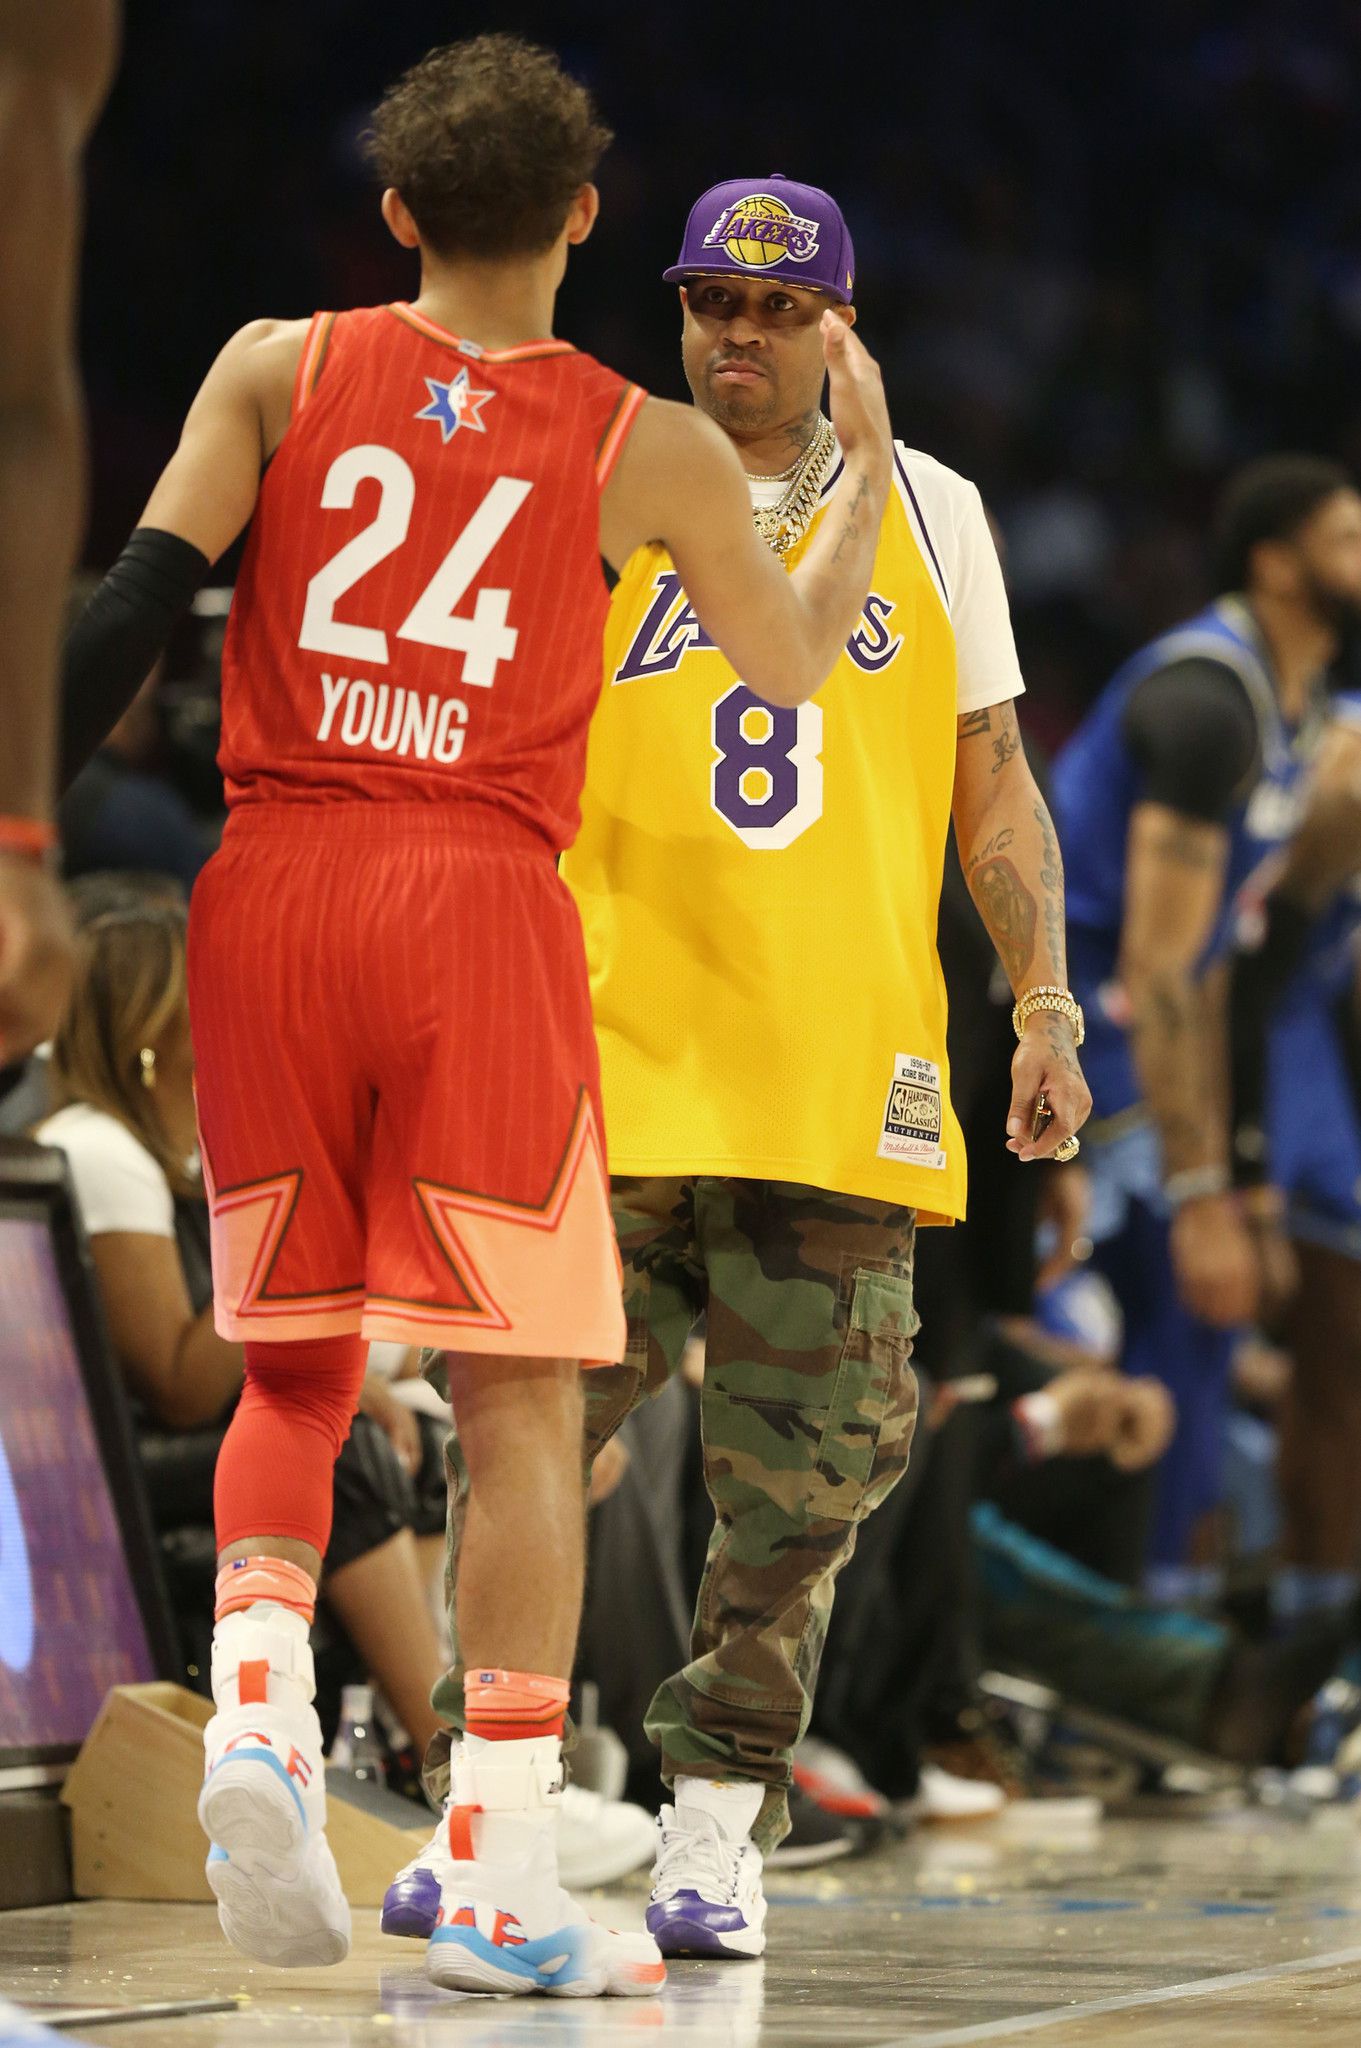 Kobe Bryant, David Stern honored before Rising Stars game